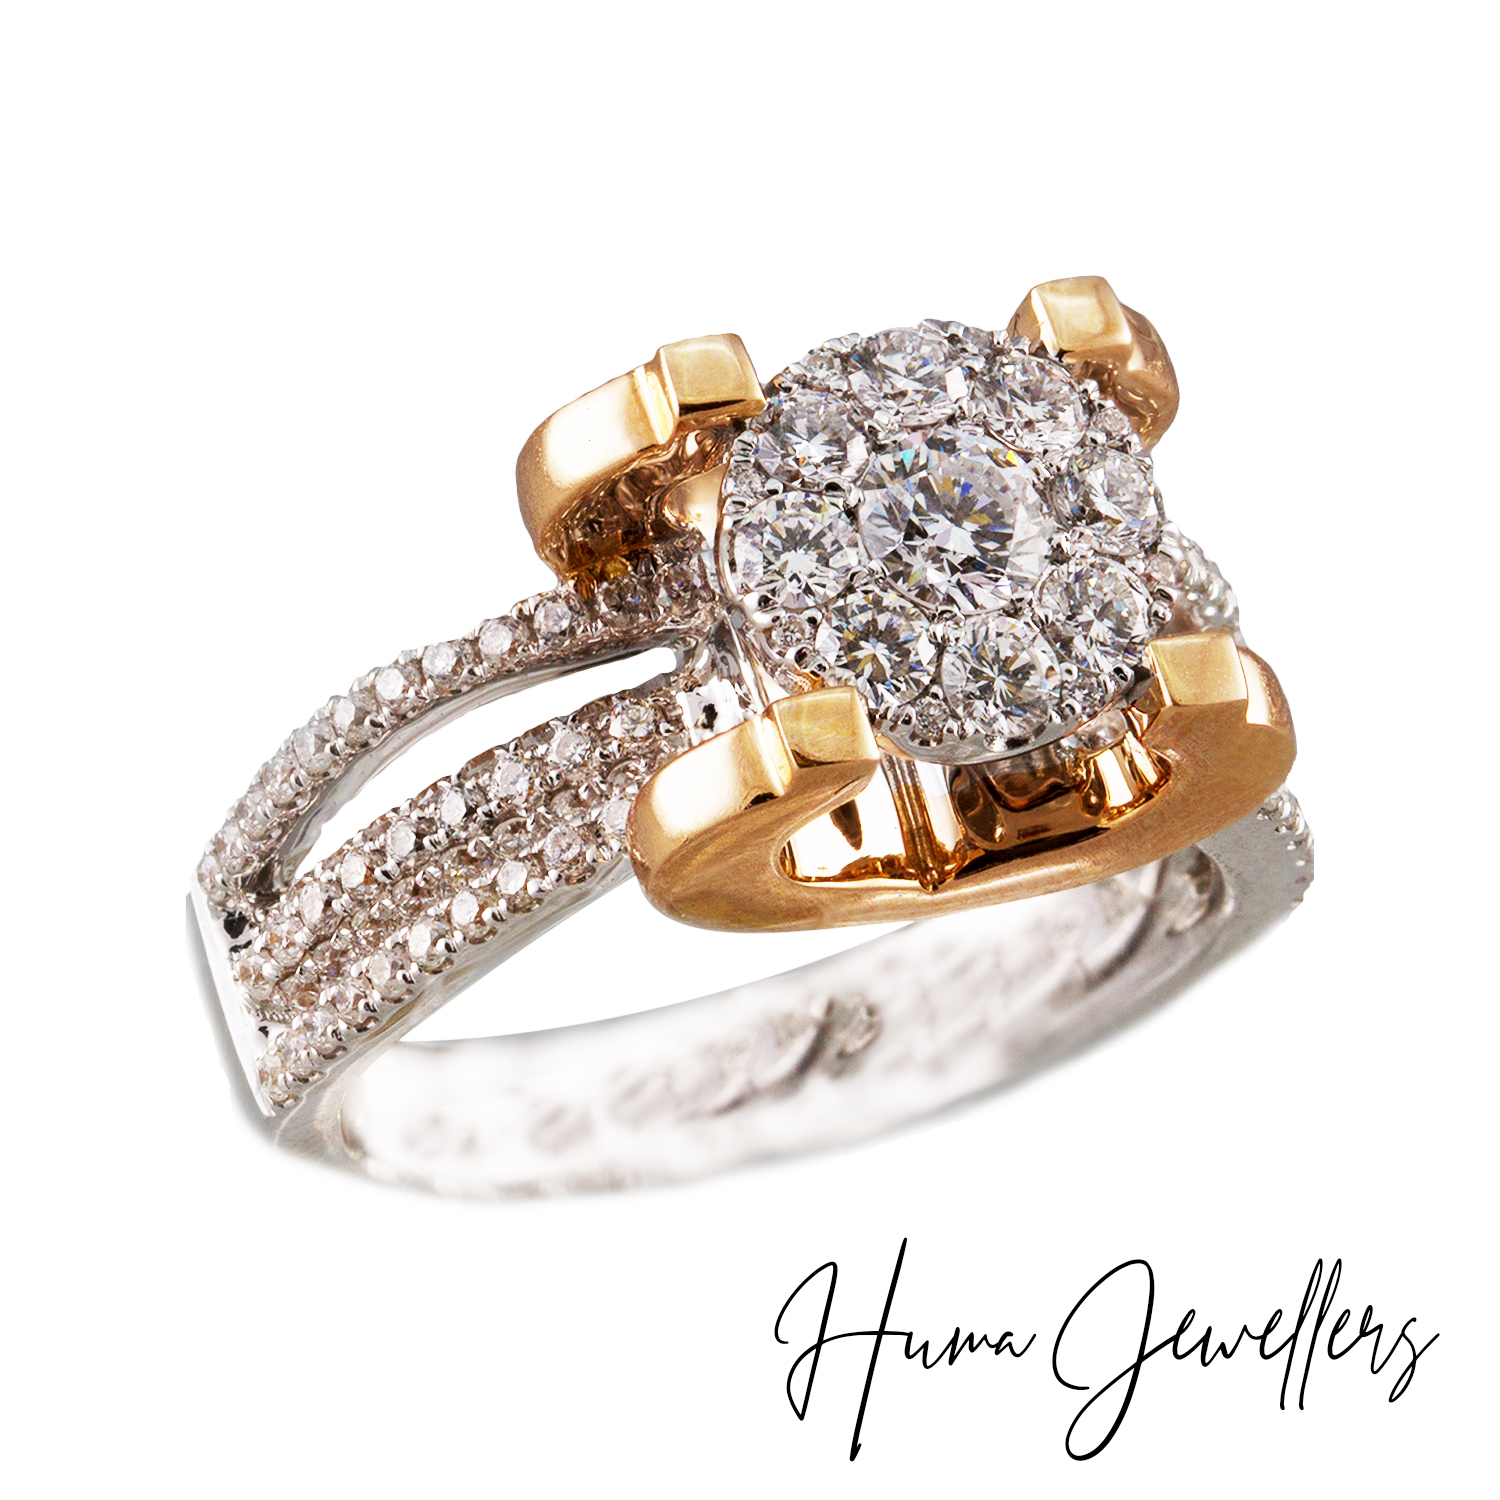 modern classic diamond ring design with round illusion precious diamonds in 18 karat rose gold by huma jewellers karachi pakistan